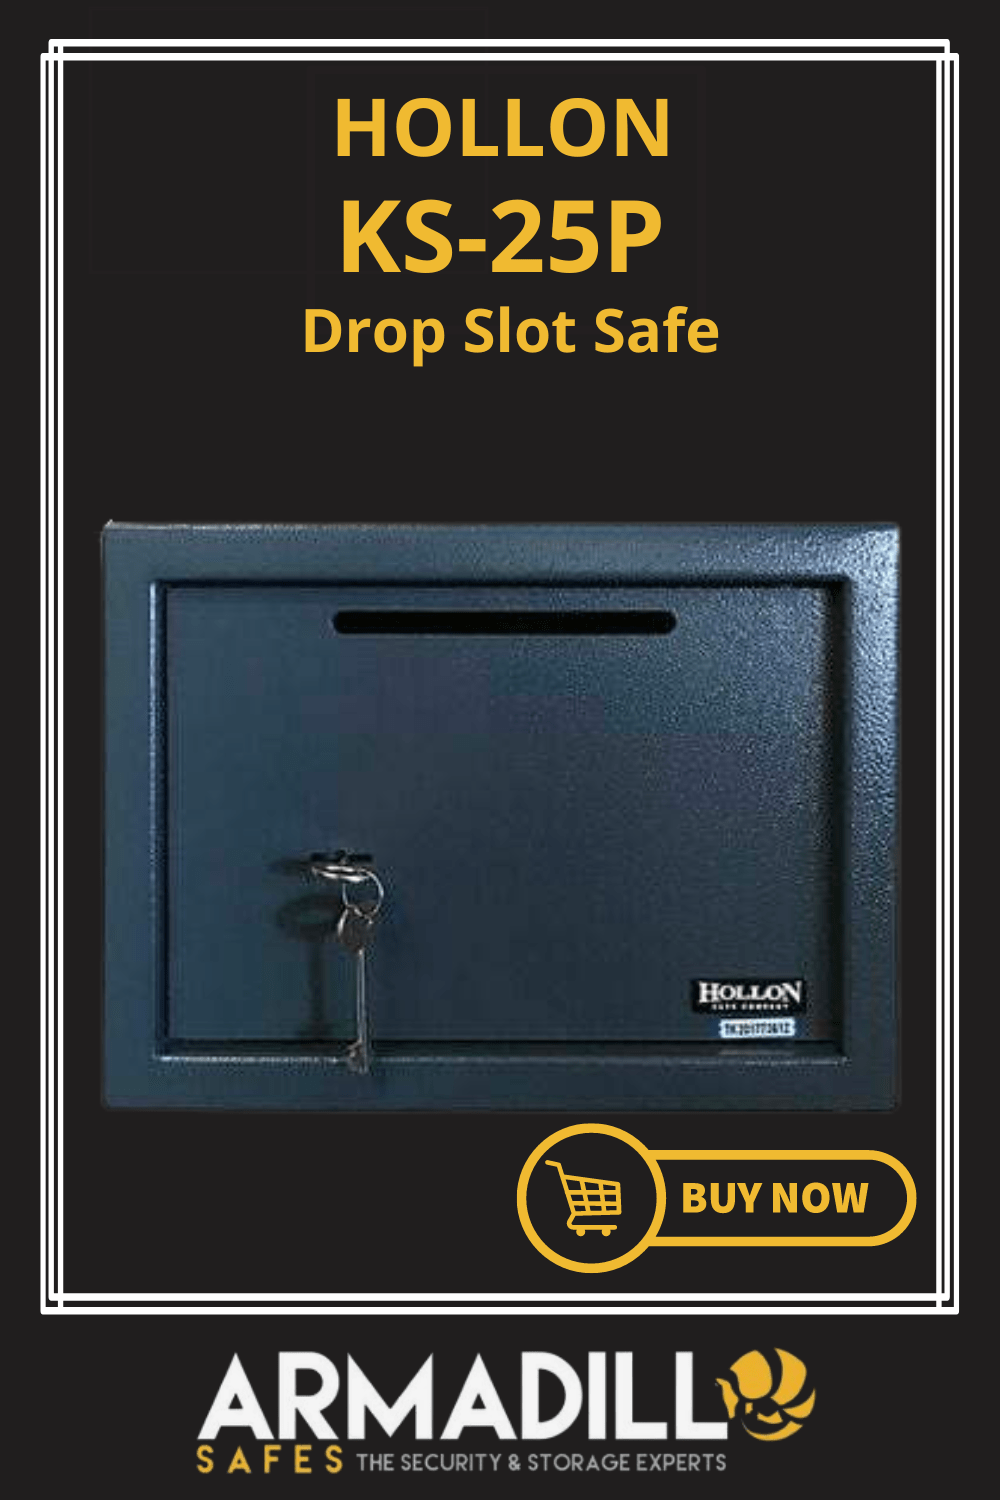 Hollon KS-25P Drop Slot Safe Armadillo Safe and Vault